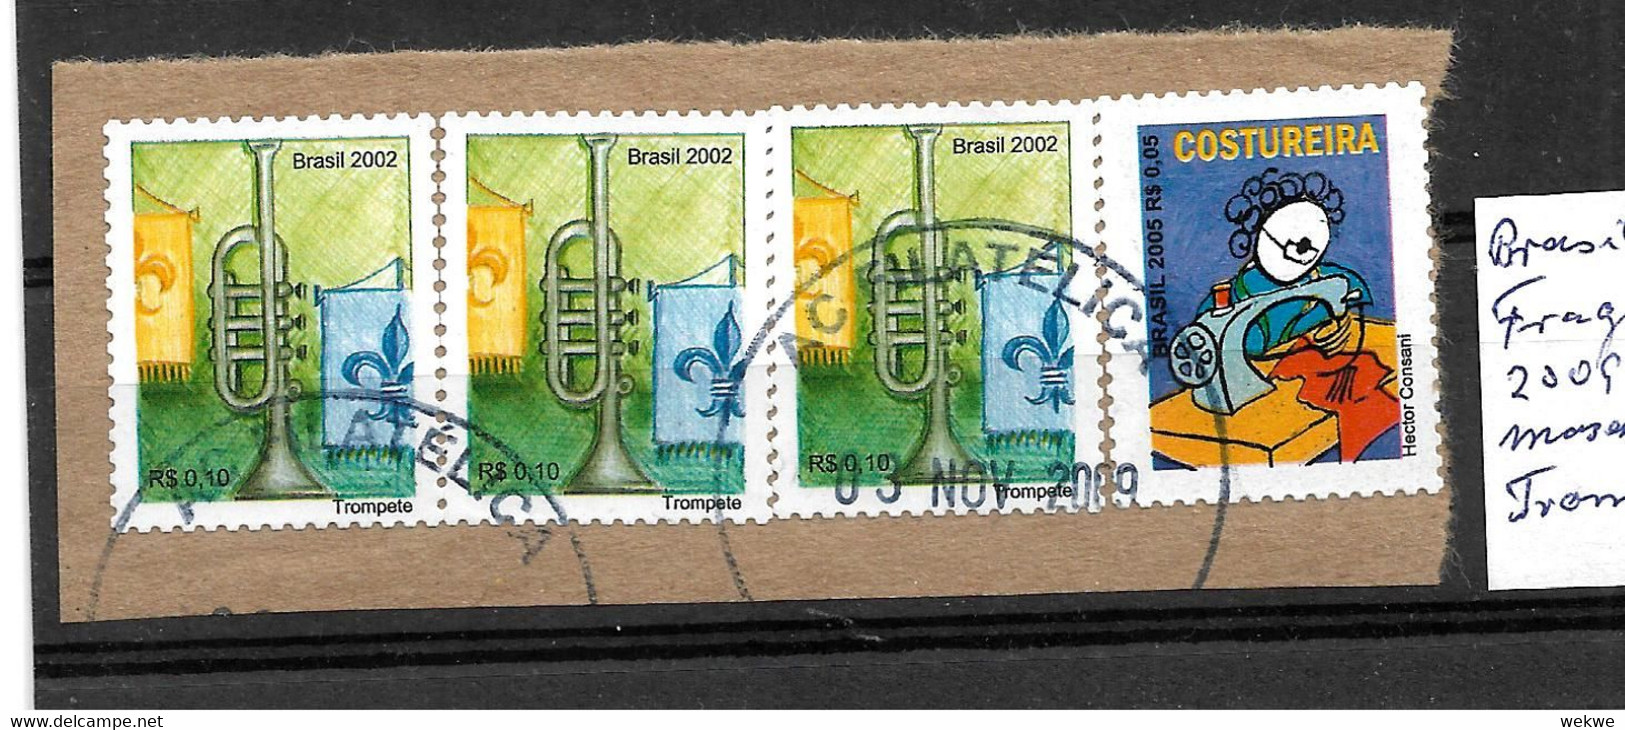 Brasilien001 / Fragment  (Nähmaschine, Trompete)  2009  O - Used Stamps